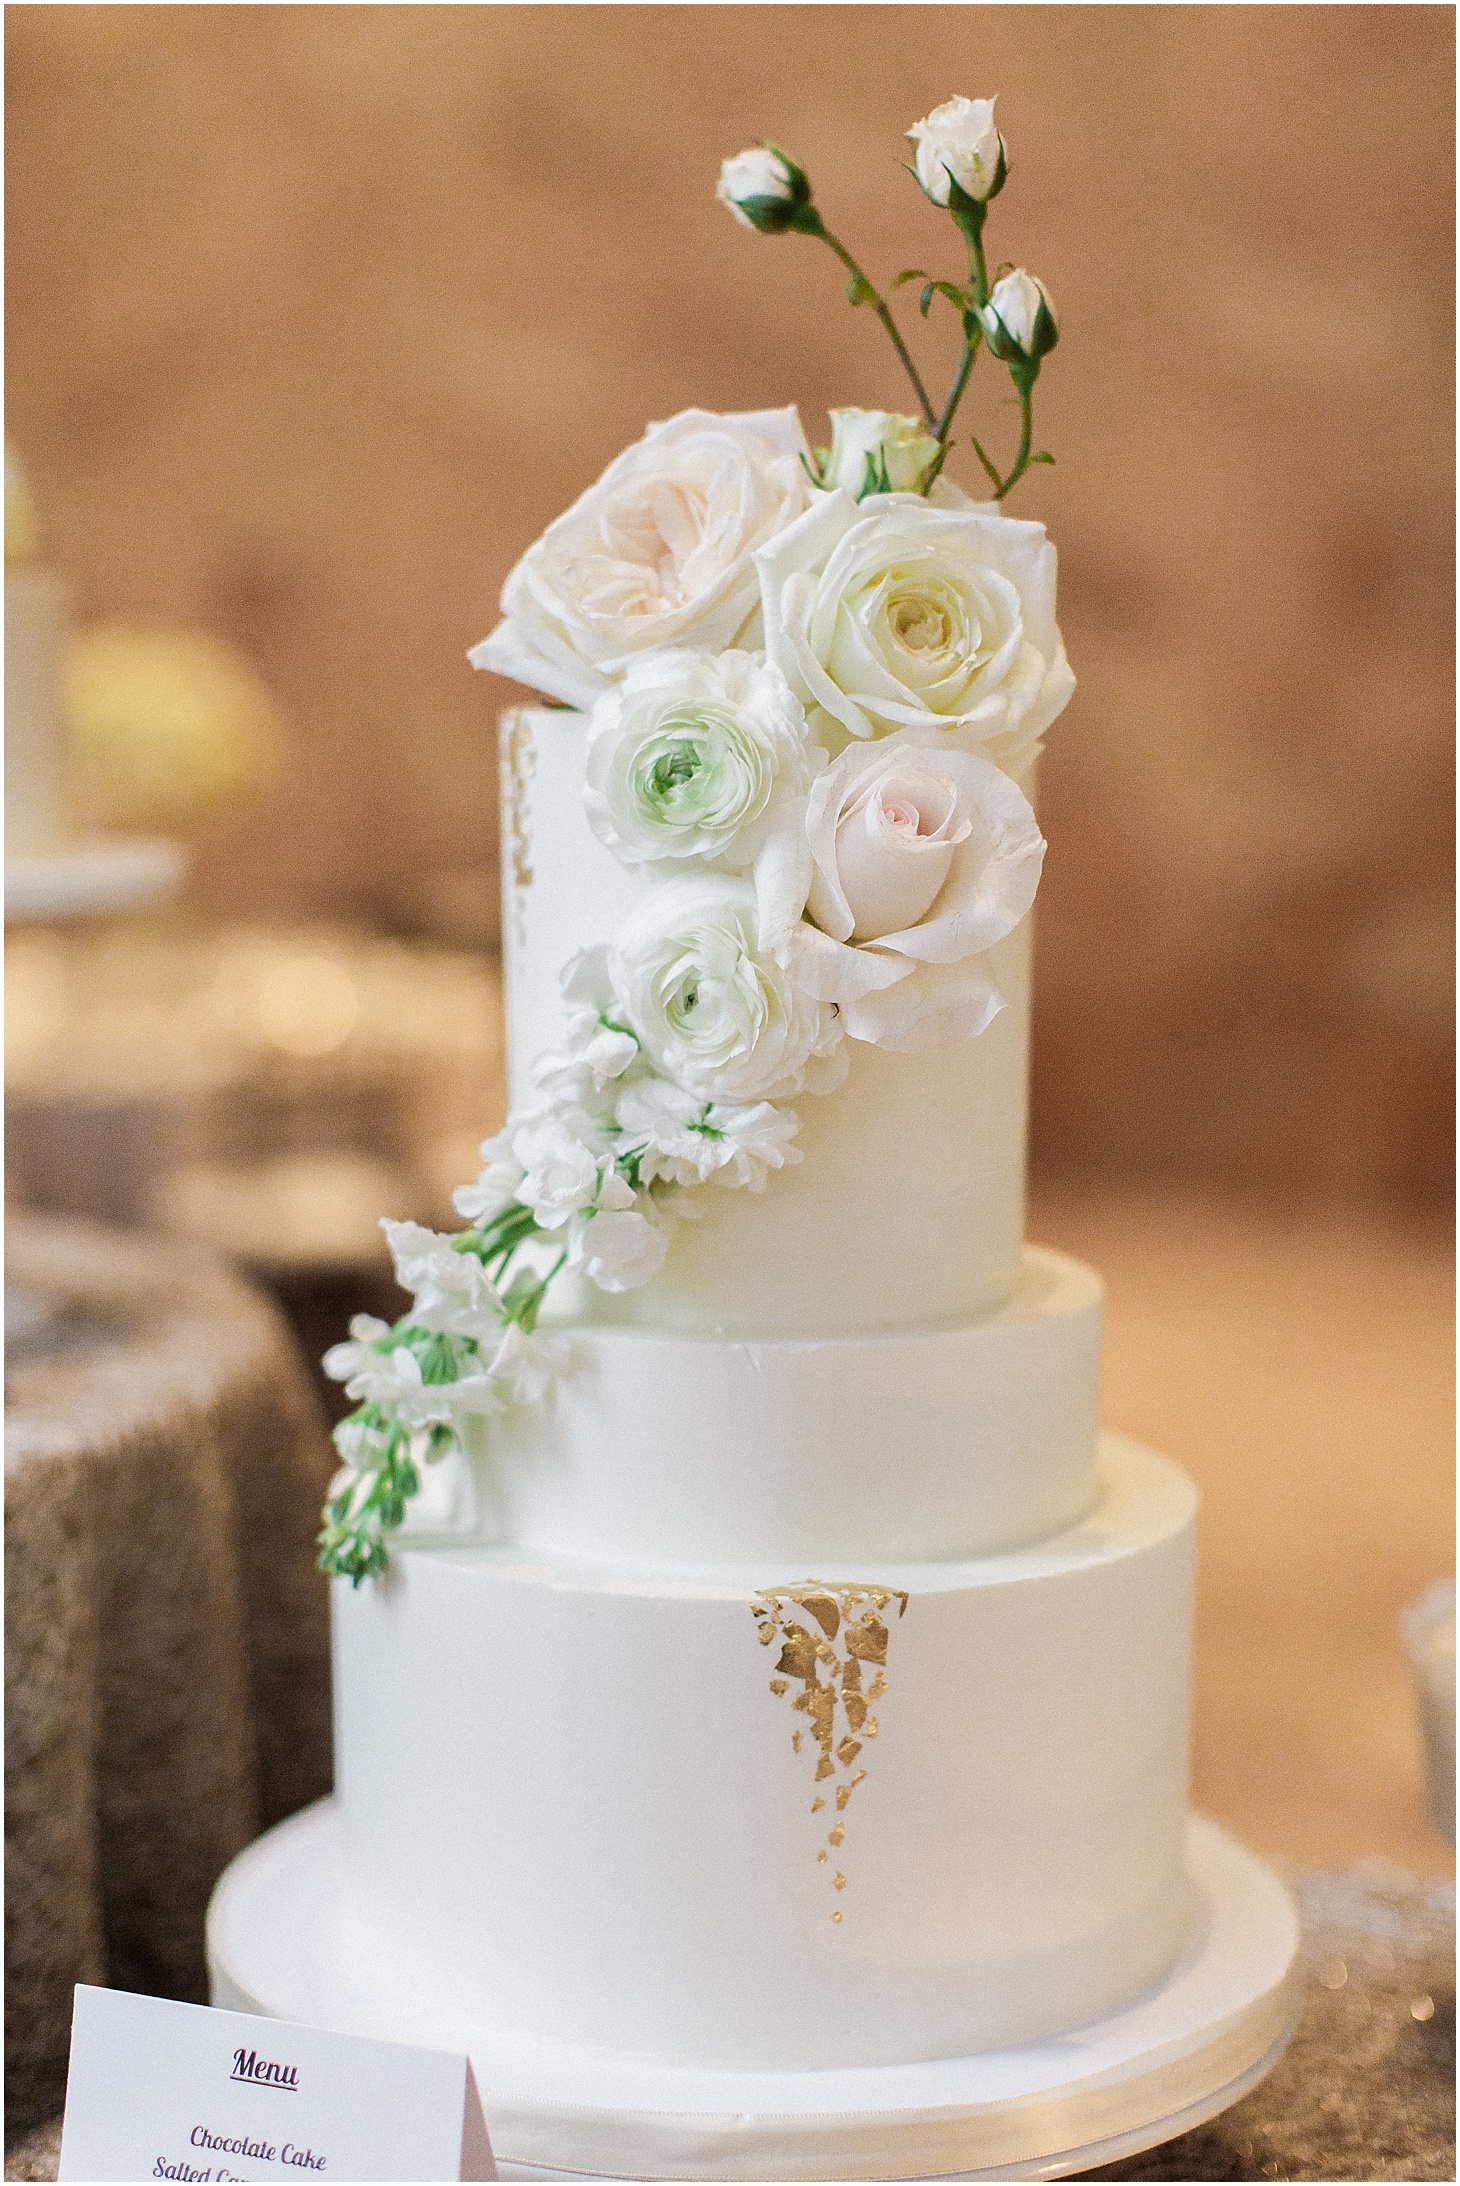 Wedding Reception at VMFA, Richmond, VA |SweetFix RVA Wedding Cake | Nikki Santerre Photography | Virginia Fine Art Film Photographer